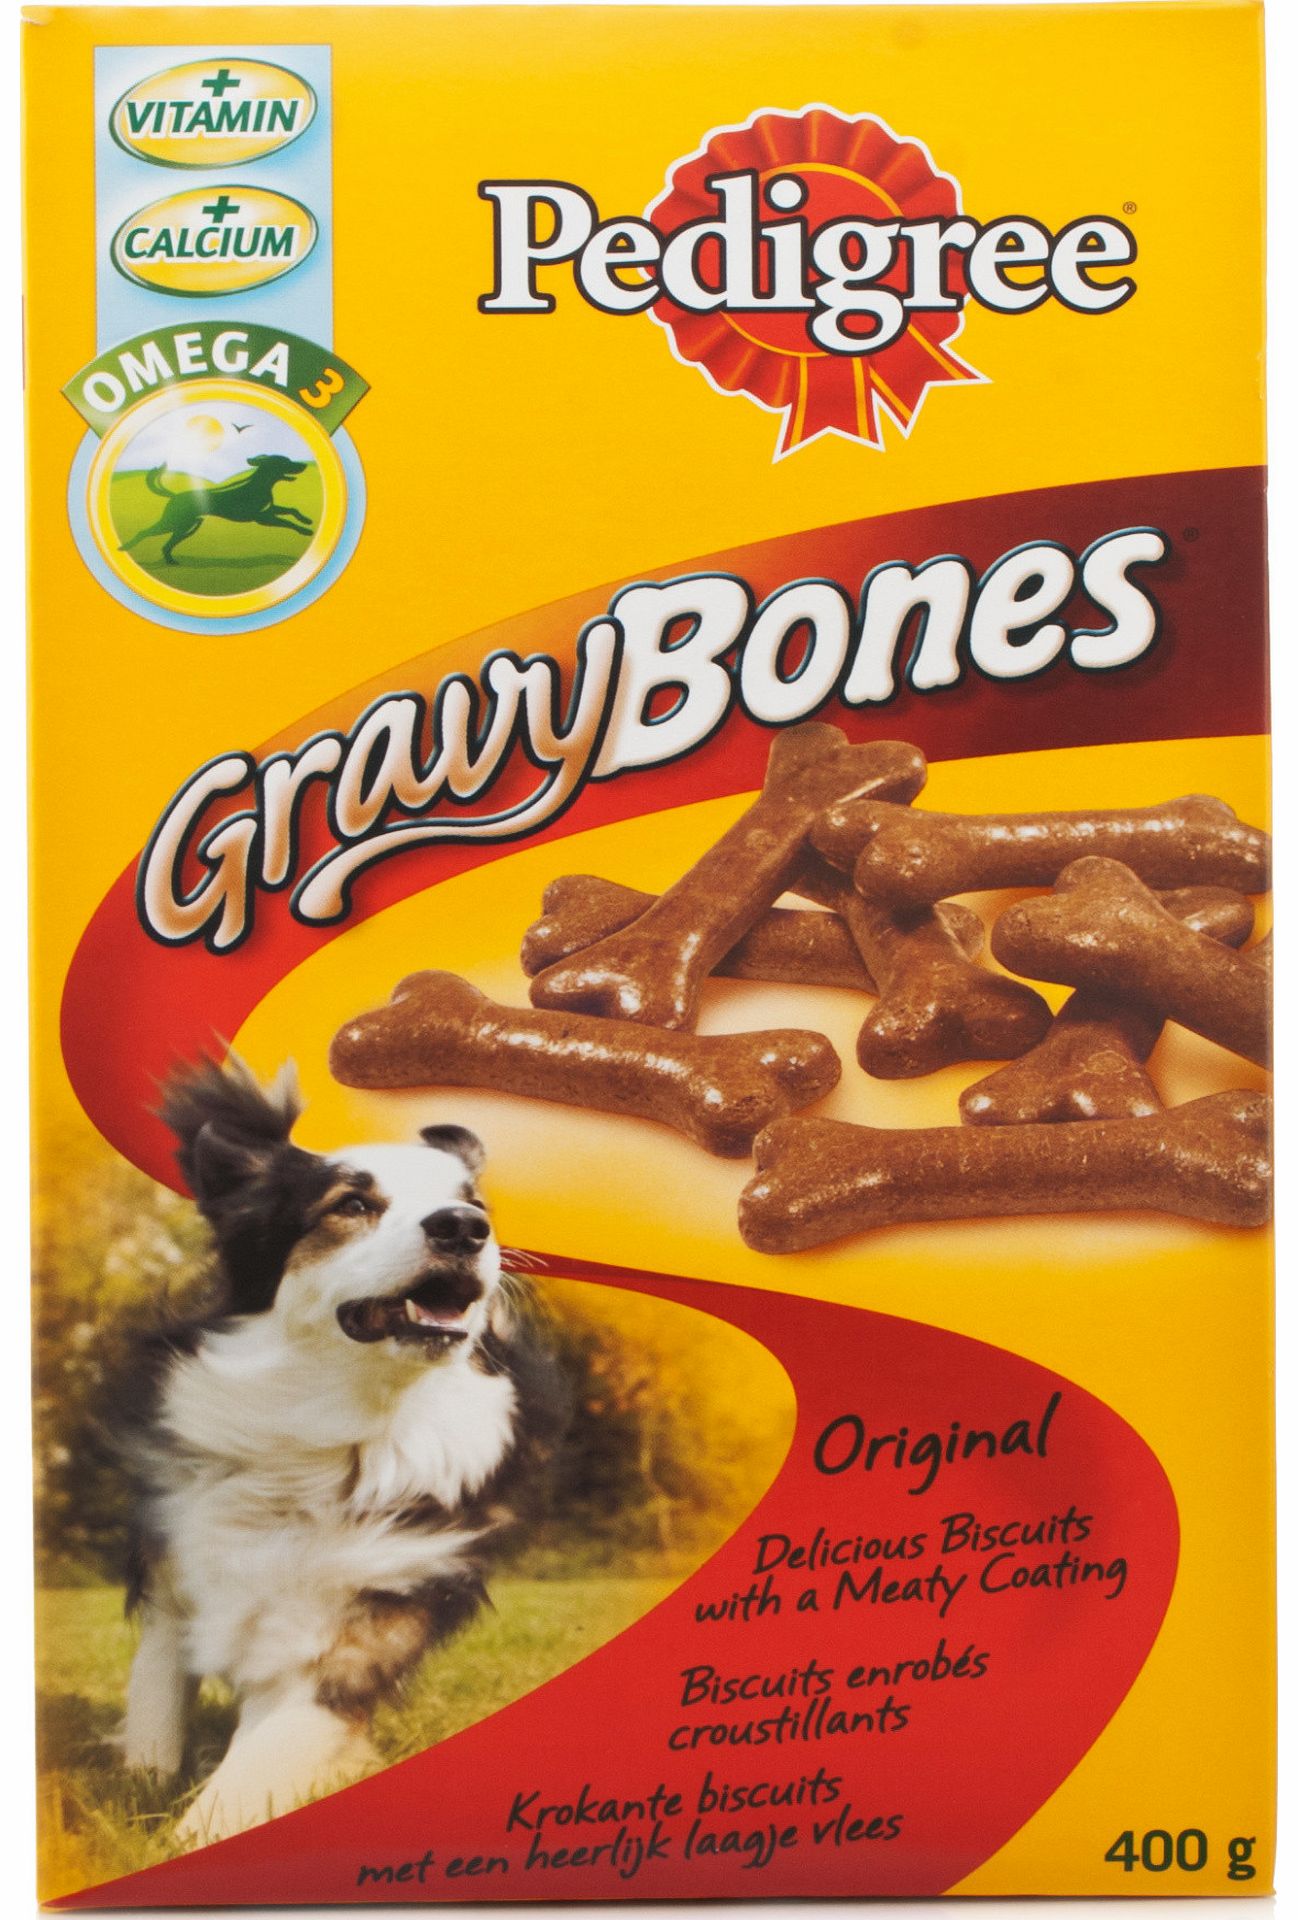 Pedigree Gravy Bones